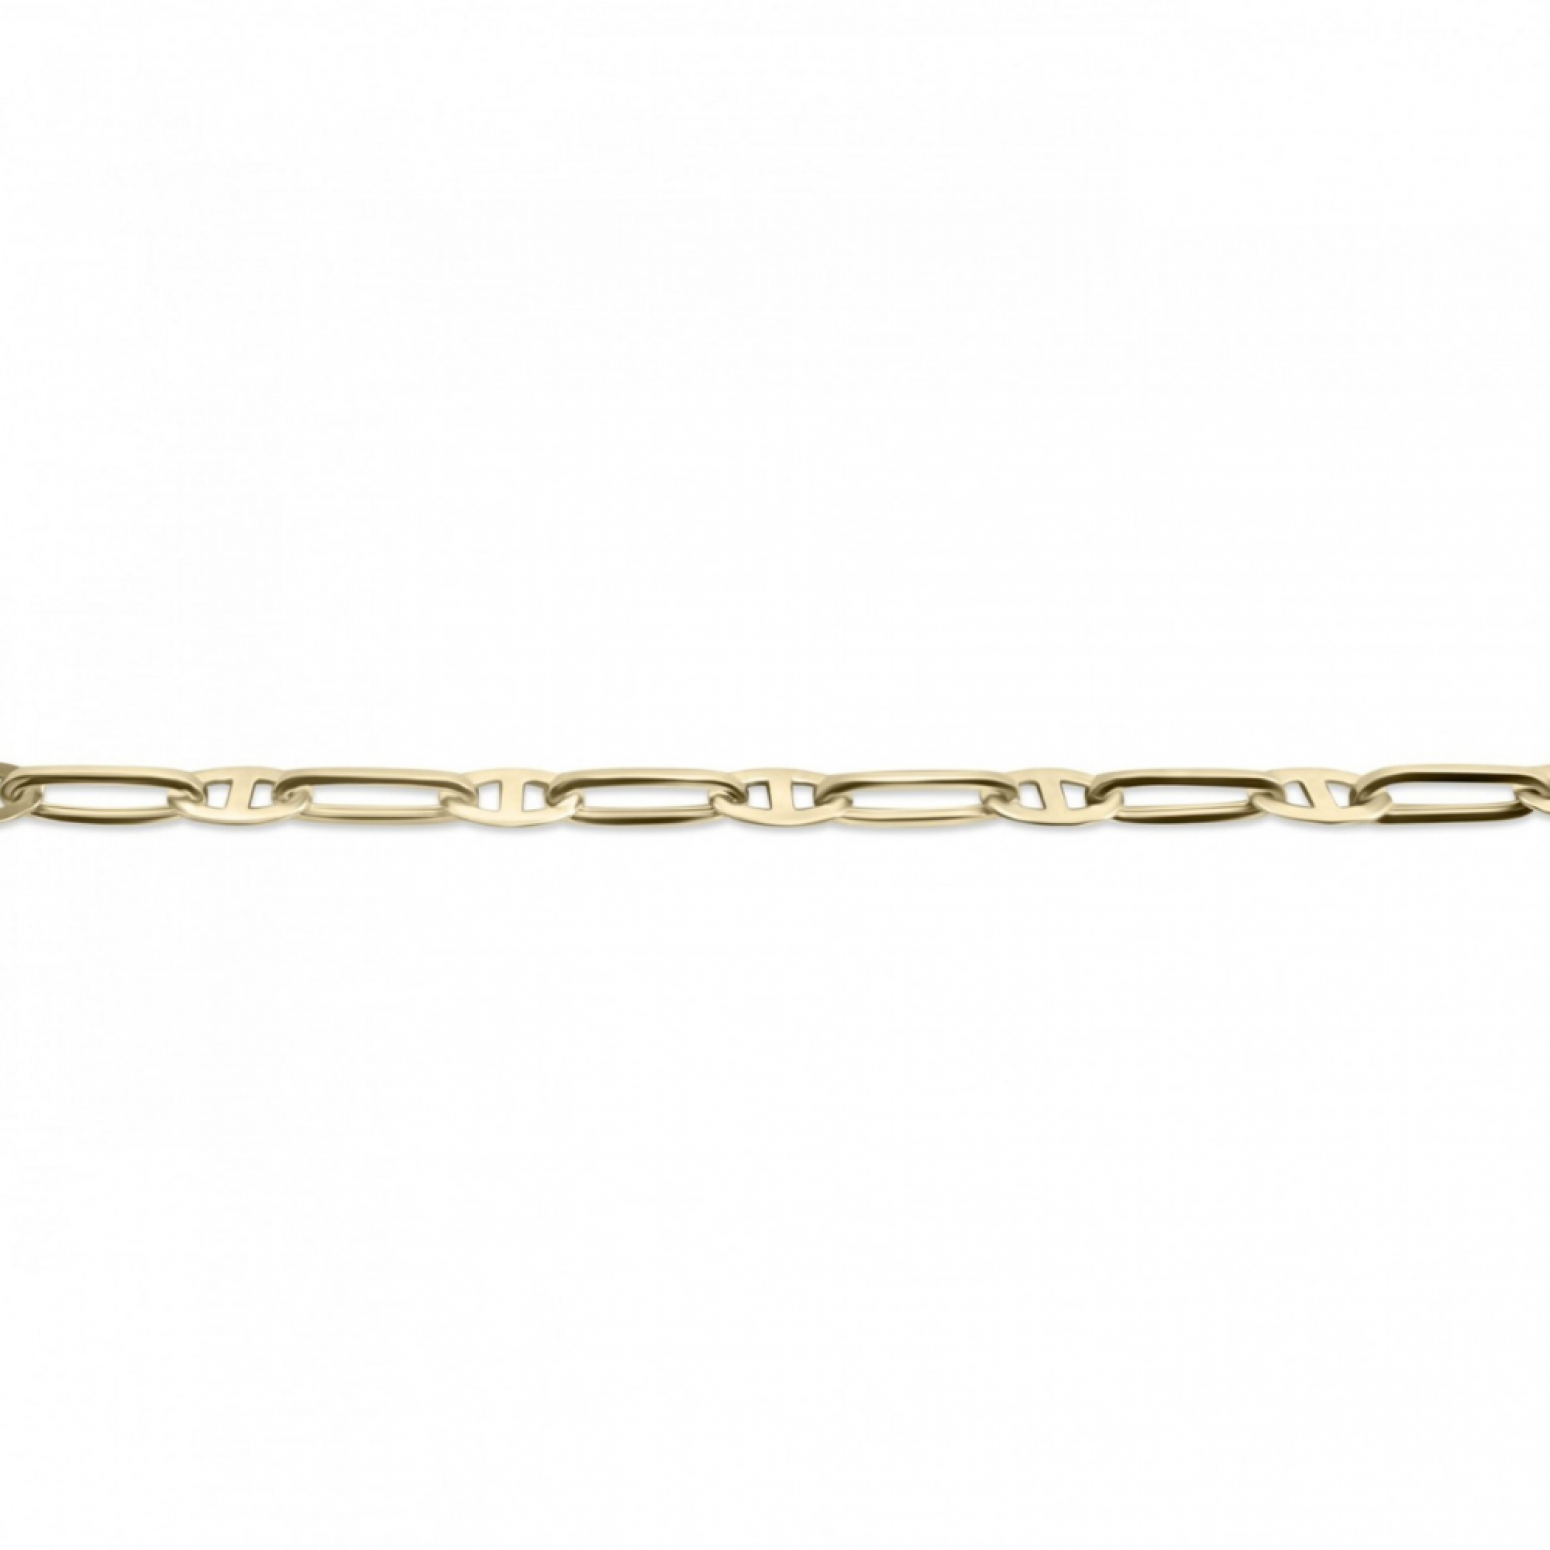 Bracelet Κ14 gold, br2928 BRACELETS Κοσμηματα - chrilia.gr